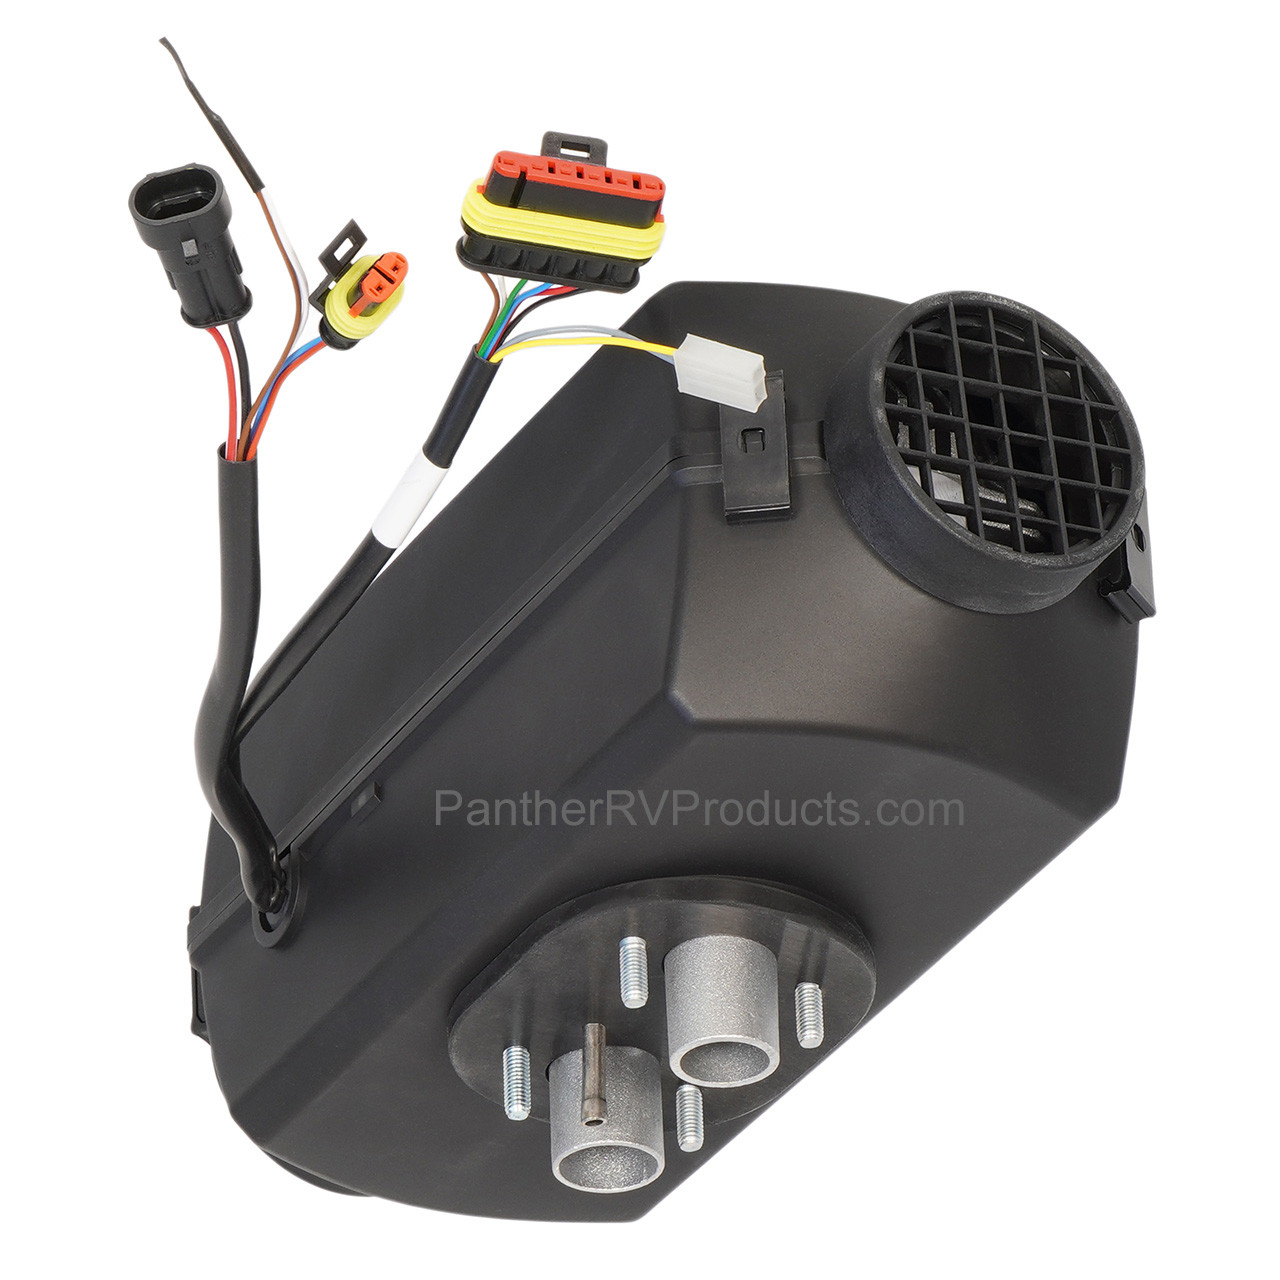  AUTOTERM Air 2D (Planar) 2 kW Diesel Air Heater 12V with PU-5  controller Similar to Webasto, Airtronic, Eberspacher, Espar for car,  cabin, boat, bus, camper - universal kit! : Automotive